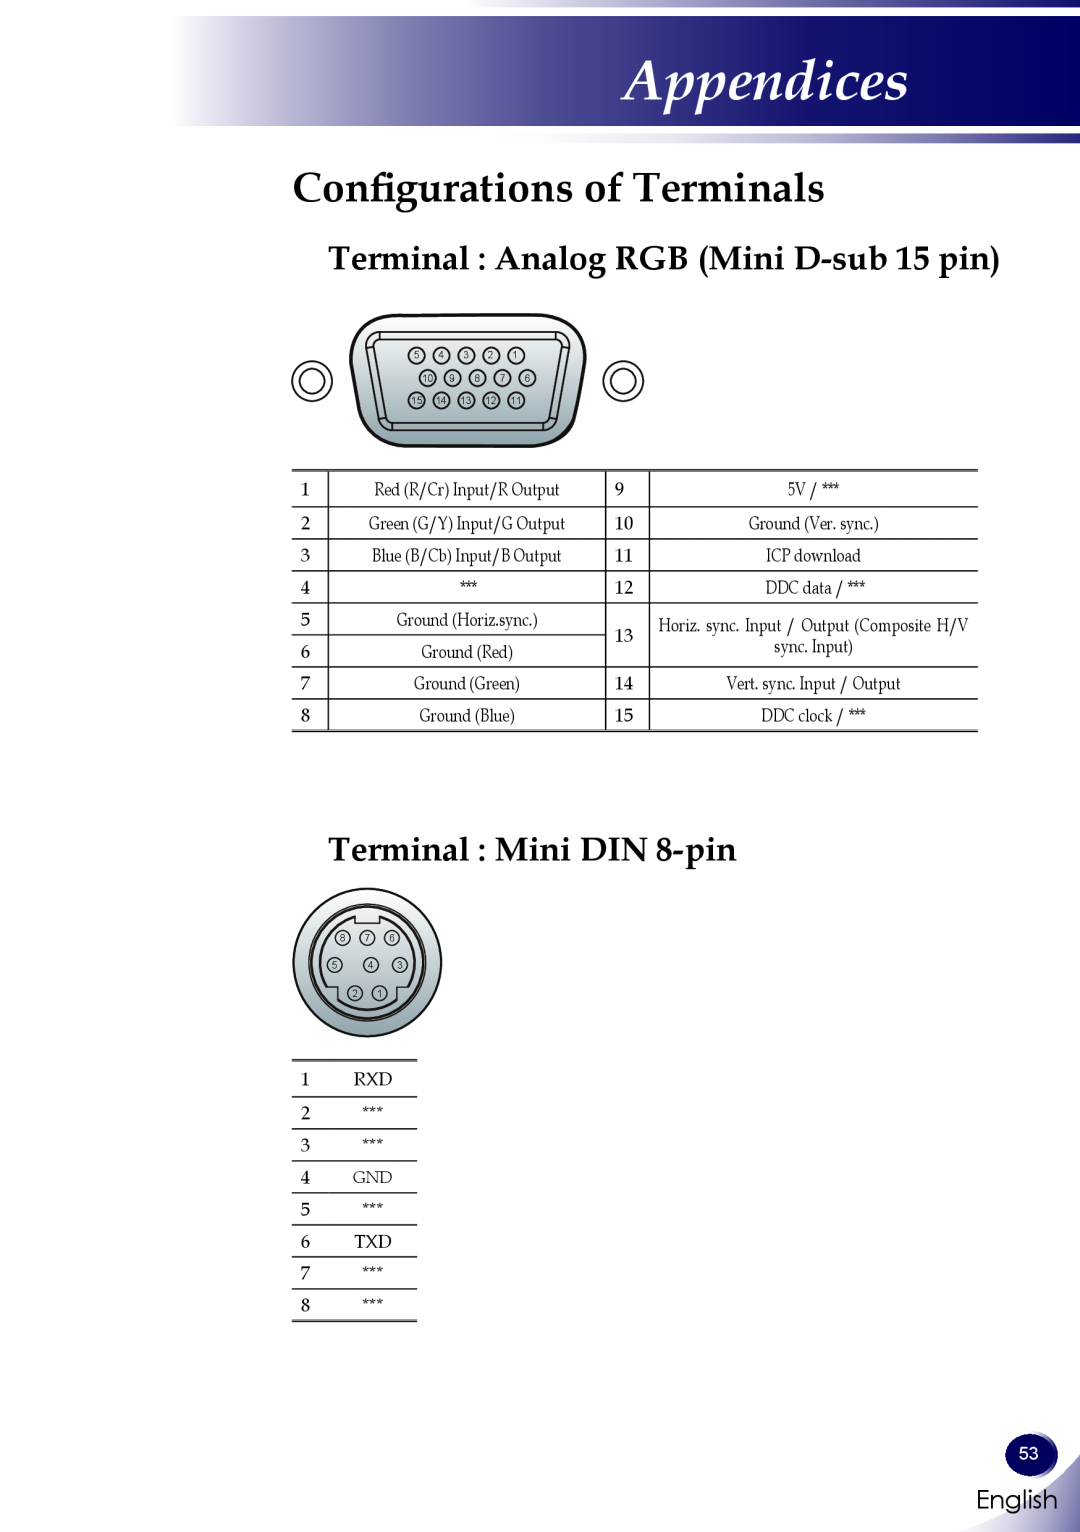 Sanyo PDG-DWL100 Configurations of Terminals, Terminal Analog RGB Mini D-sub 15 pin, Terminal Mini DIN 8-pin, Appendices 